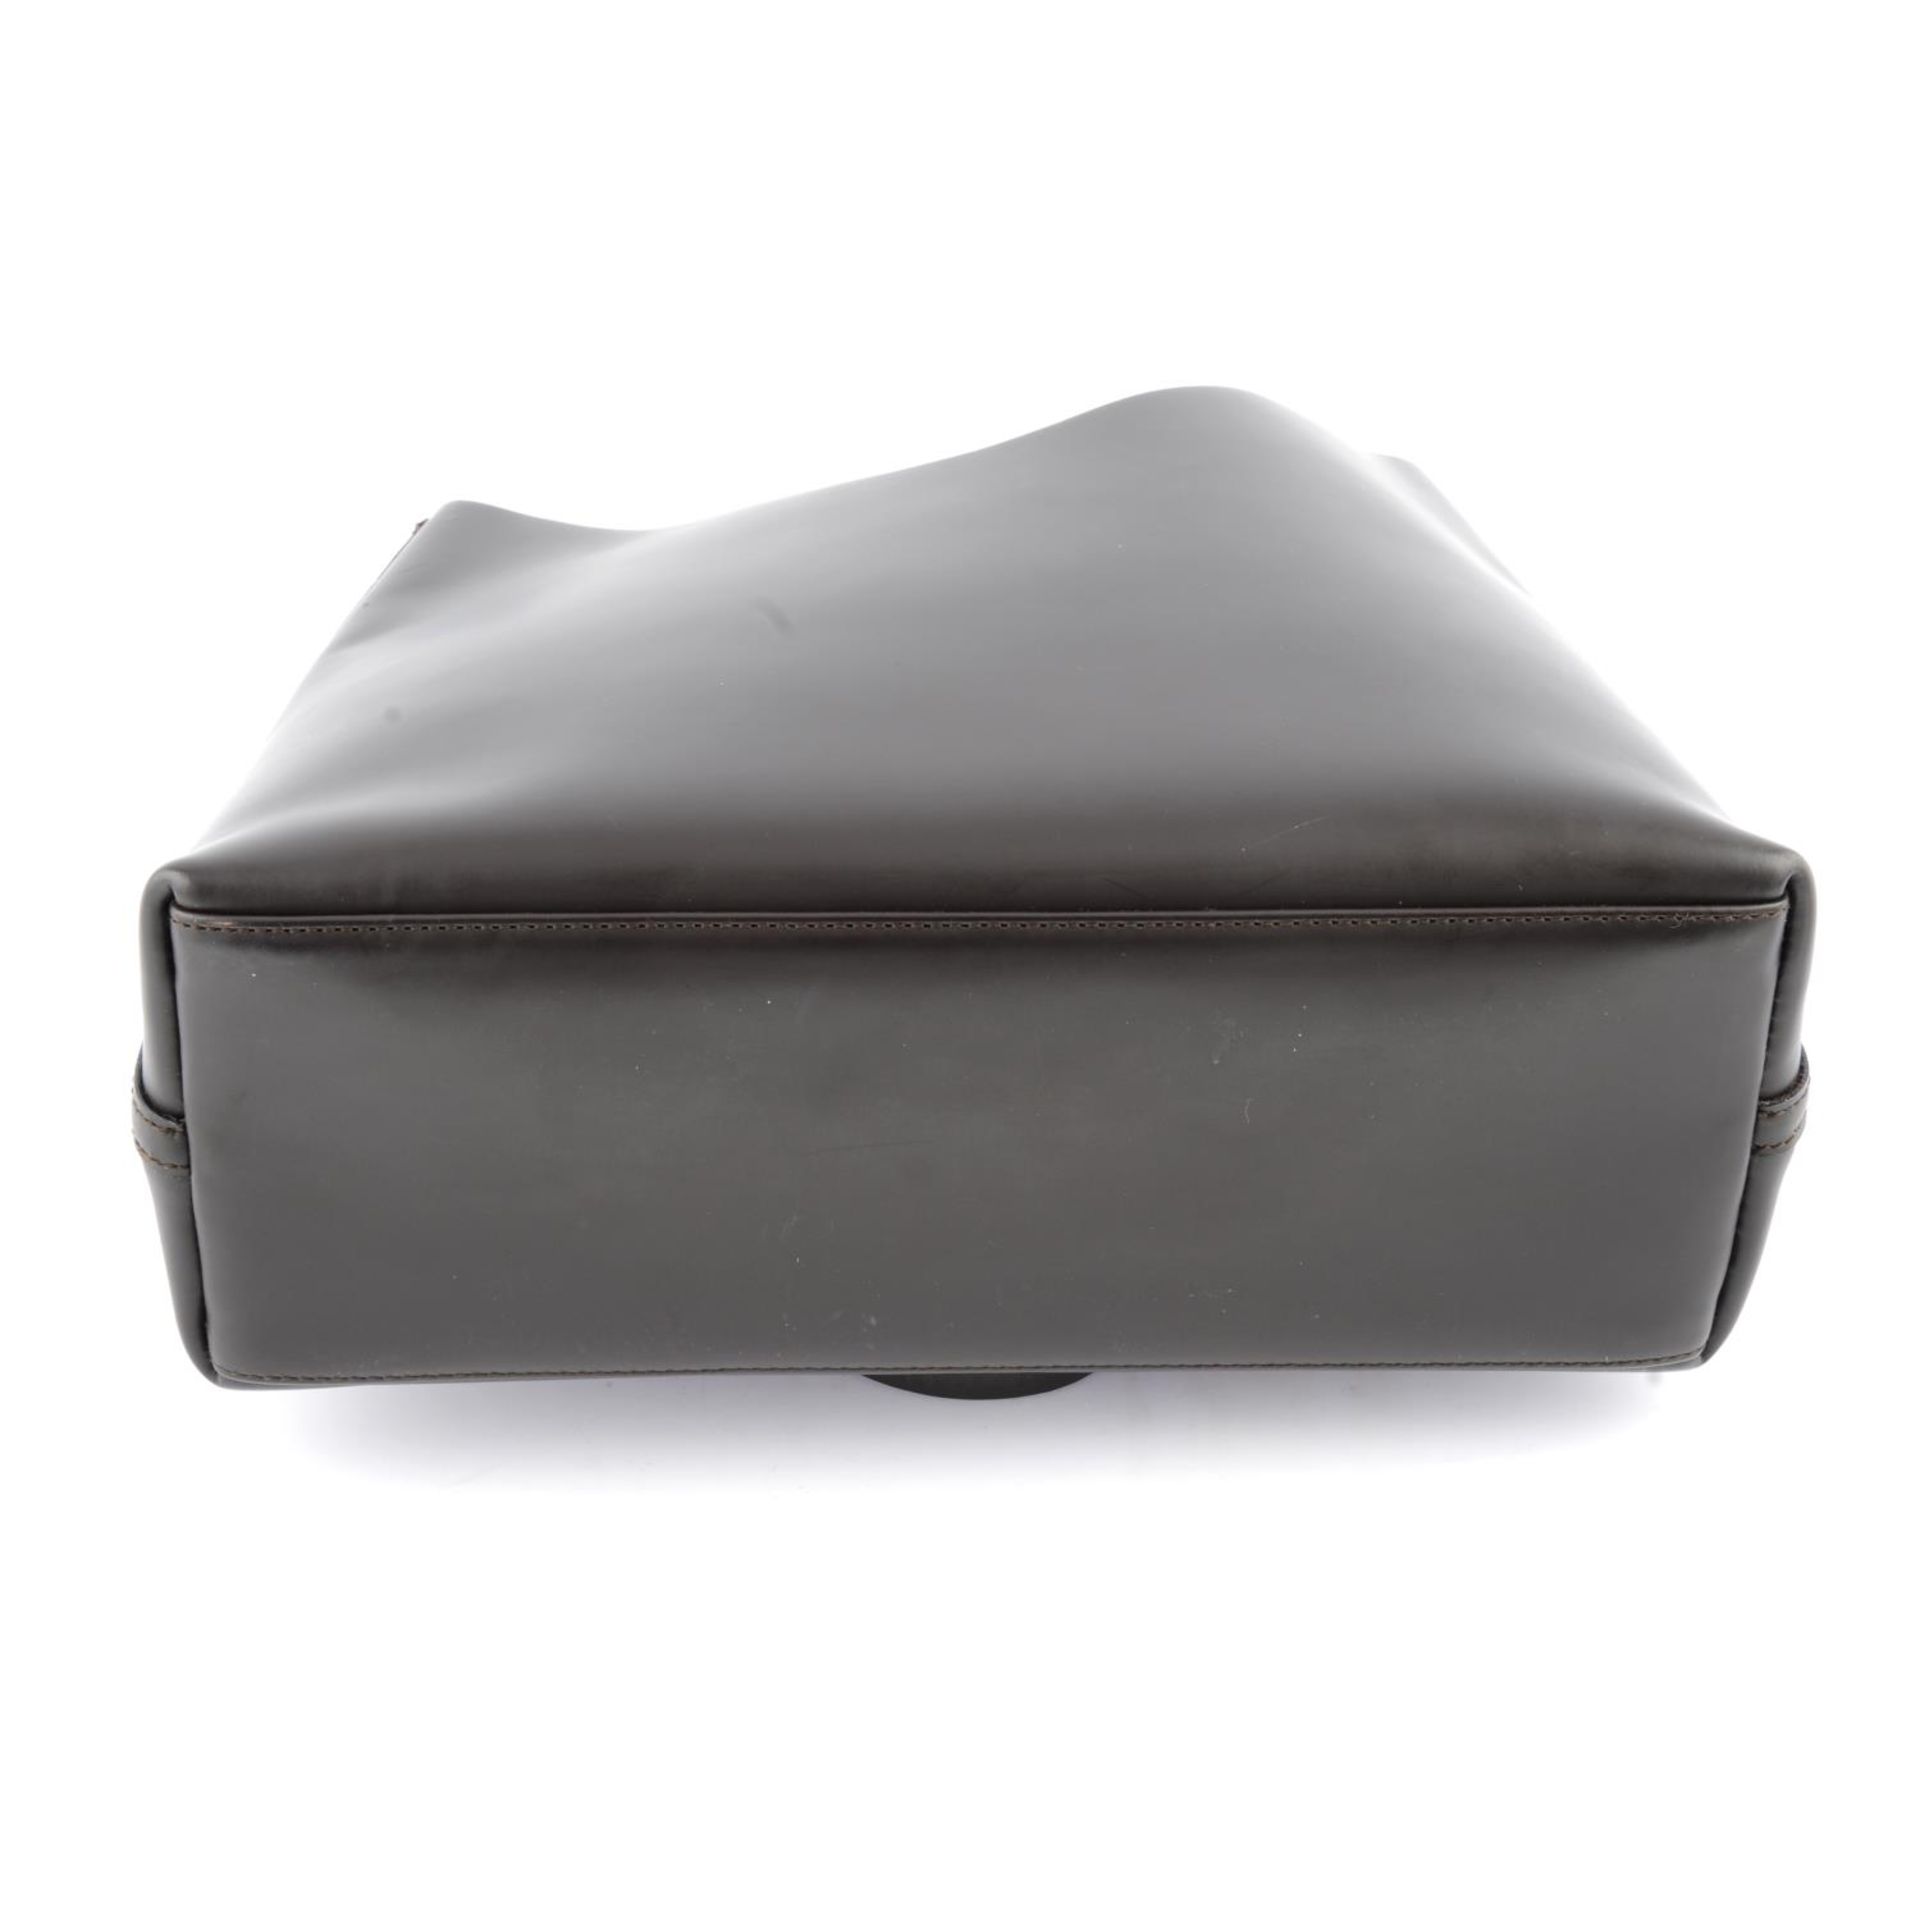 GUCCI - a brown leather handbag. - Image 4 of 5